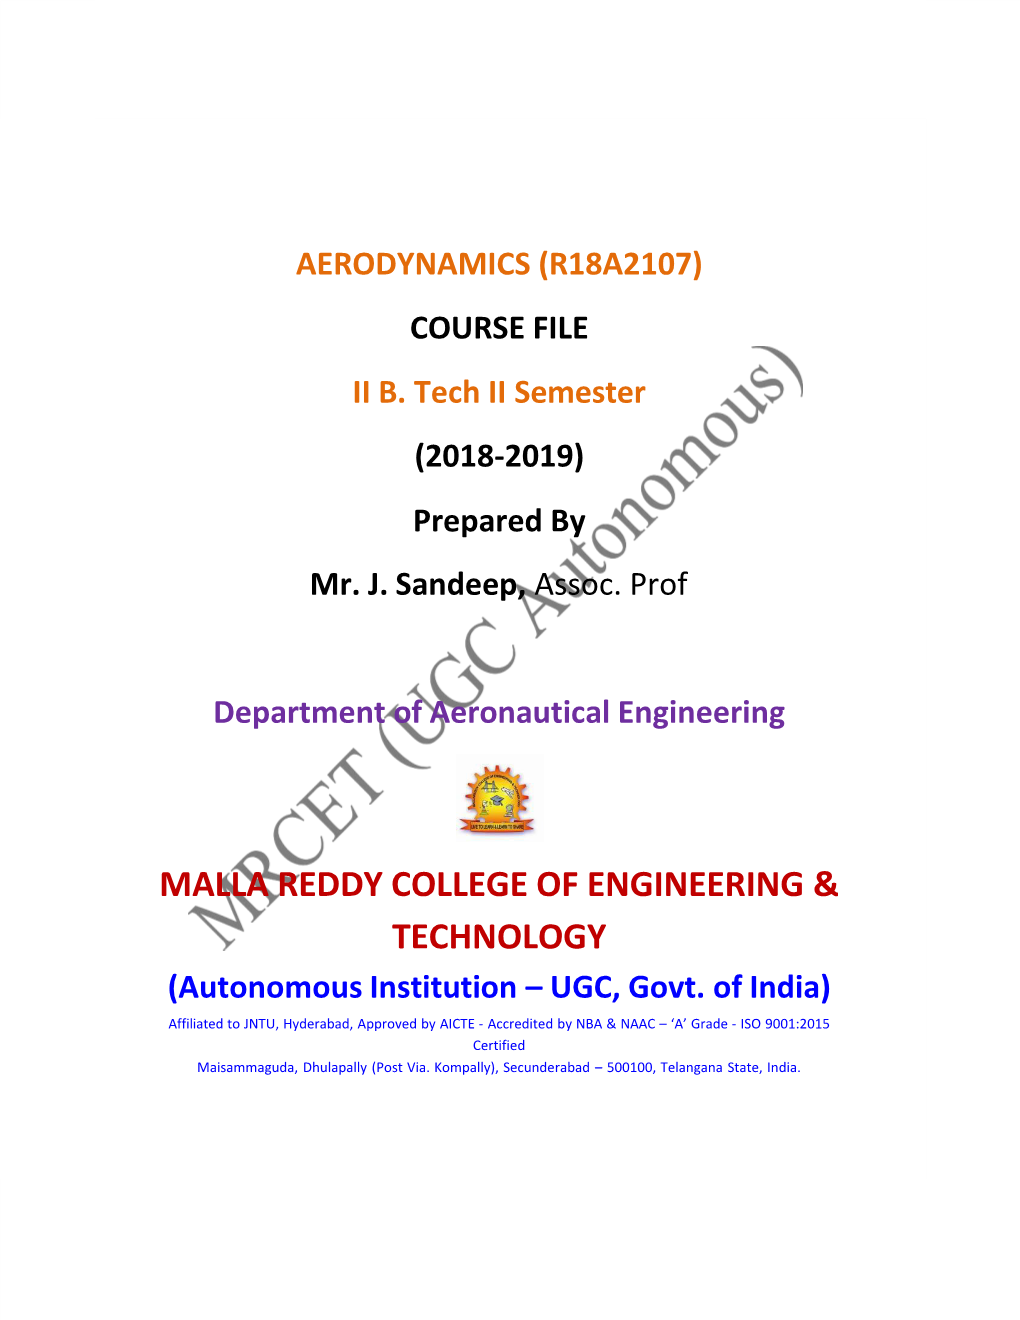 Aerodynamics (R18a2107) Course File Ii B